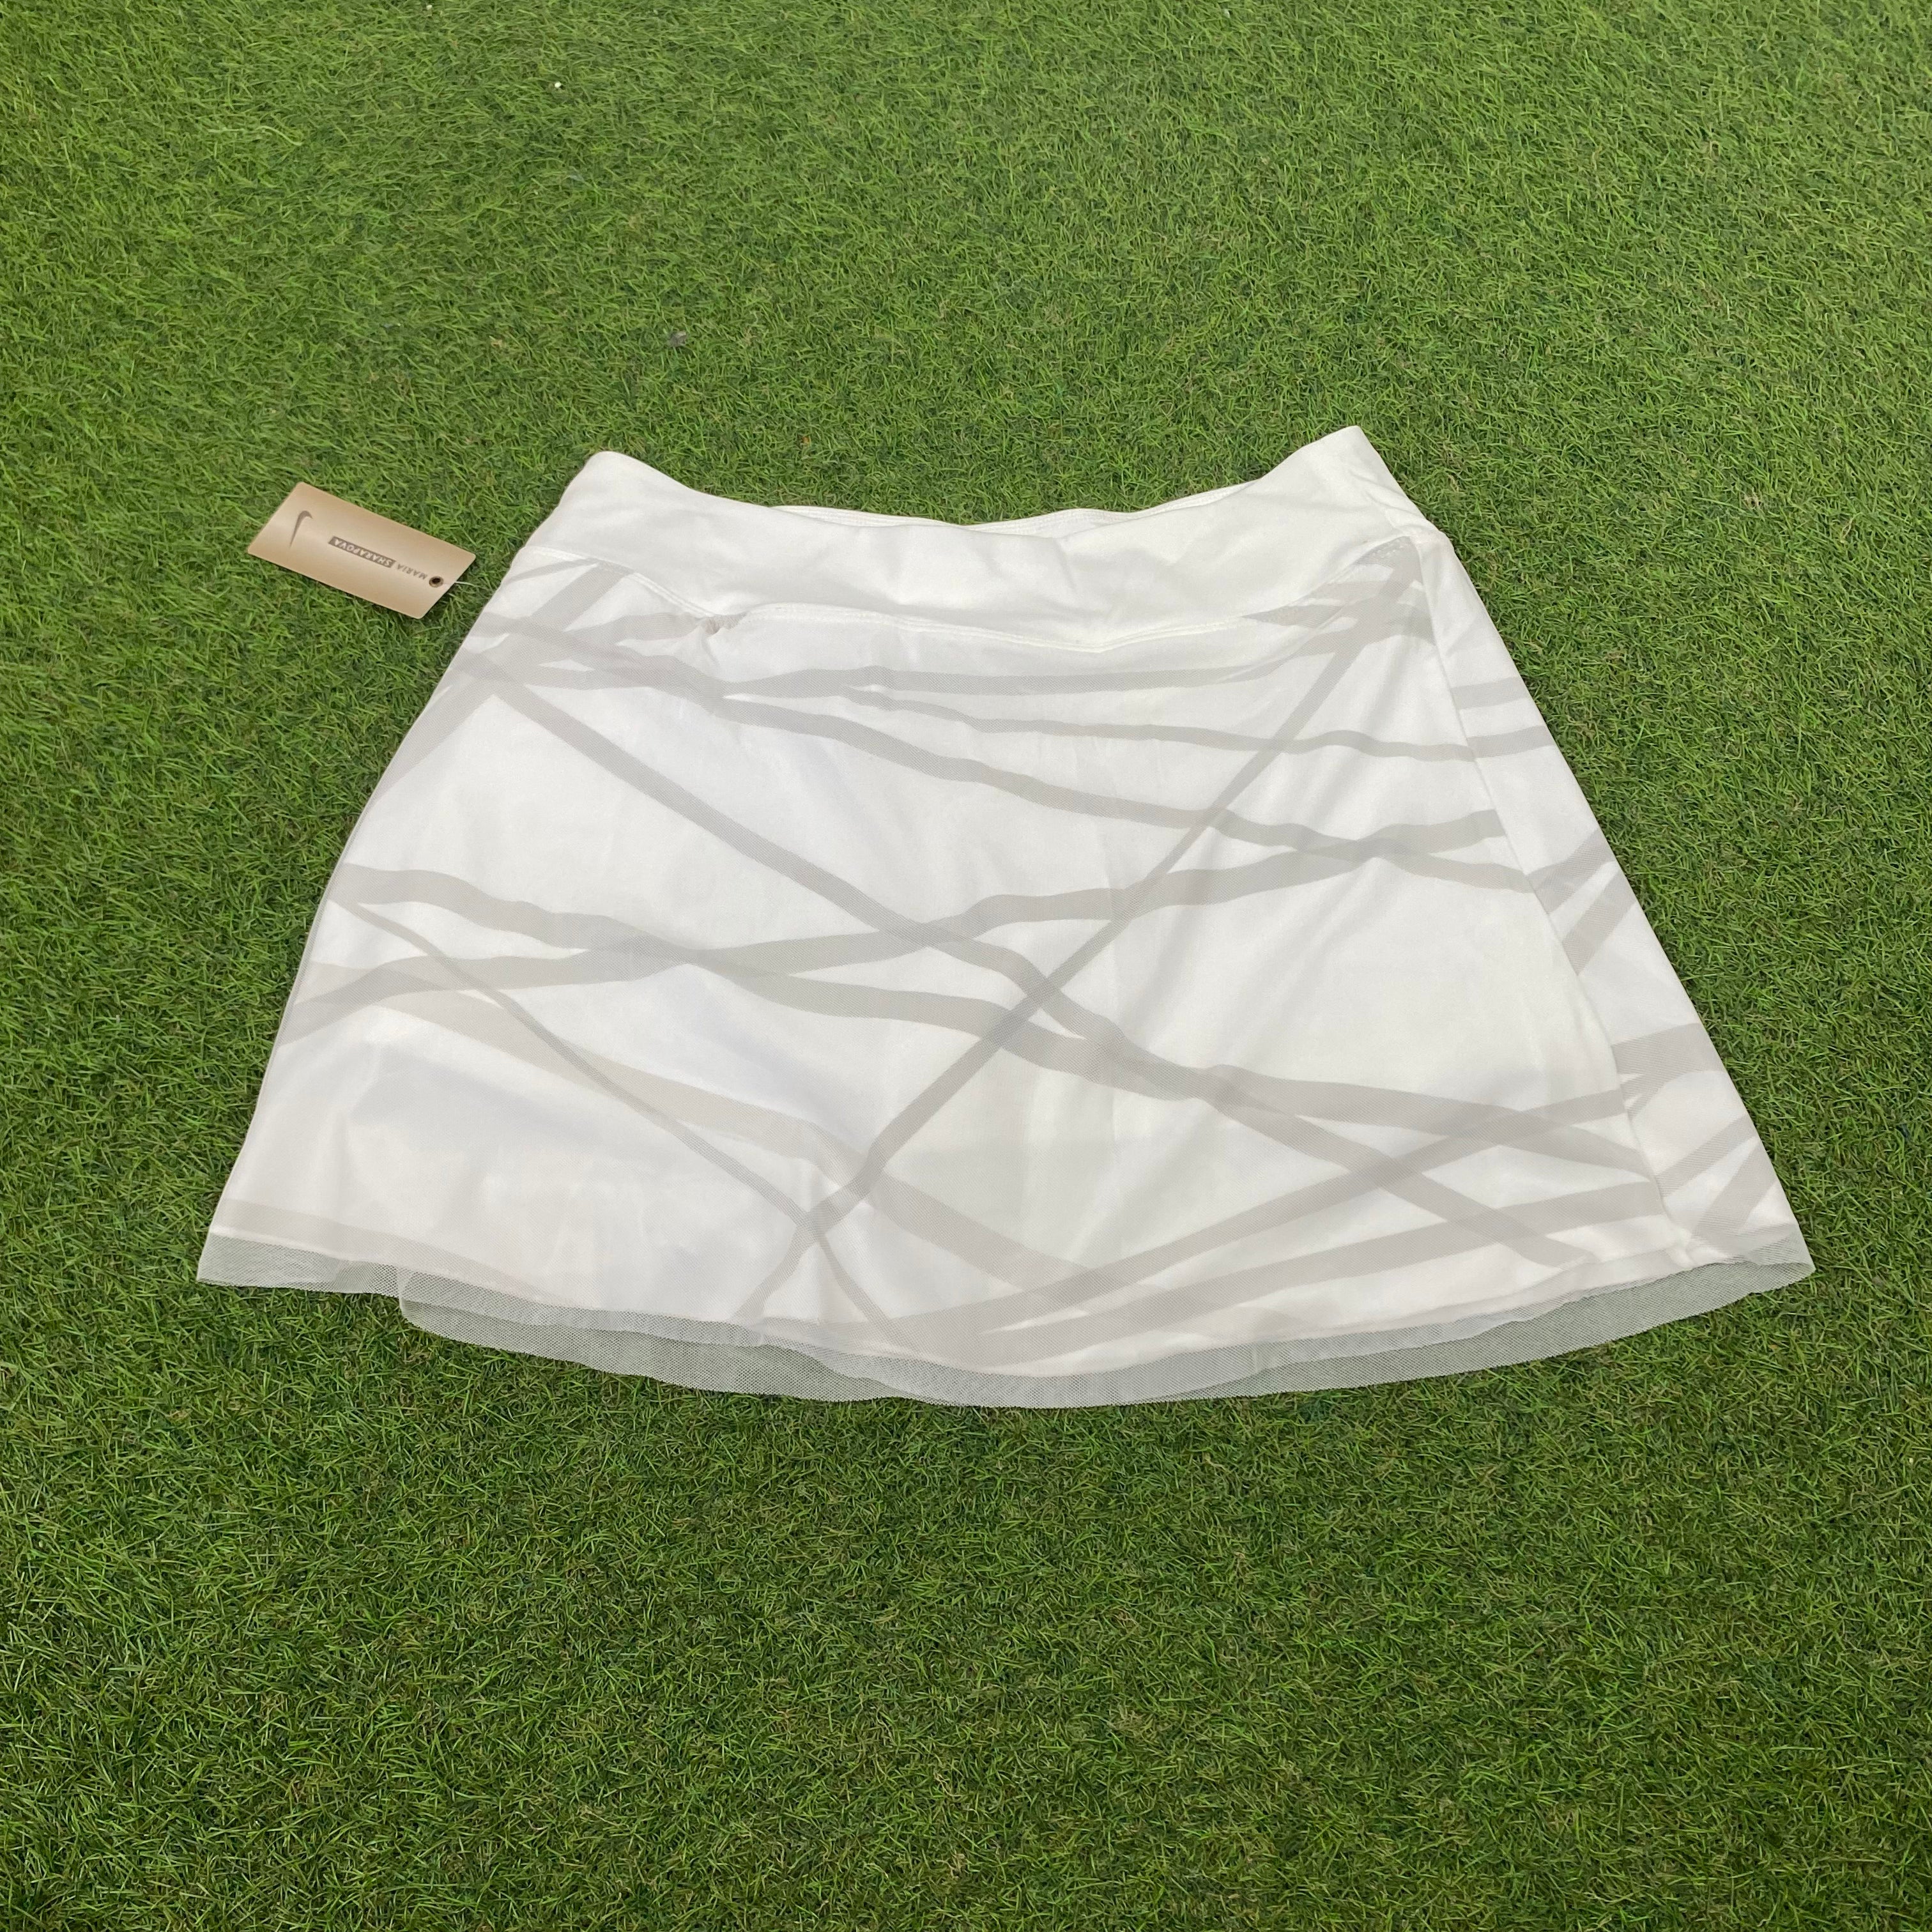 00s Nike Tennis Skirt White Small